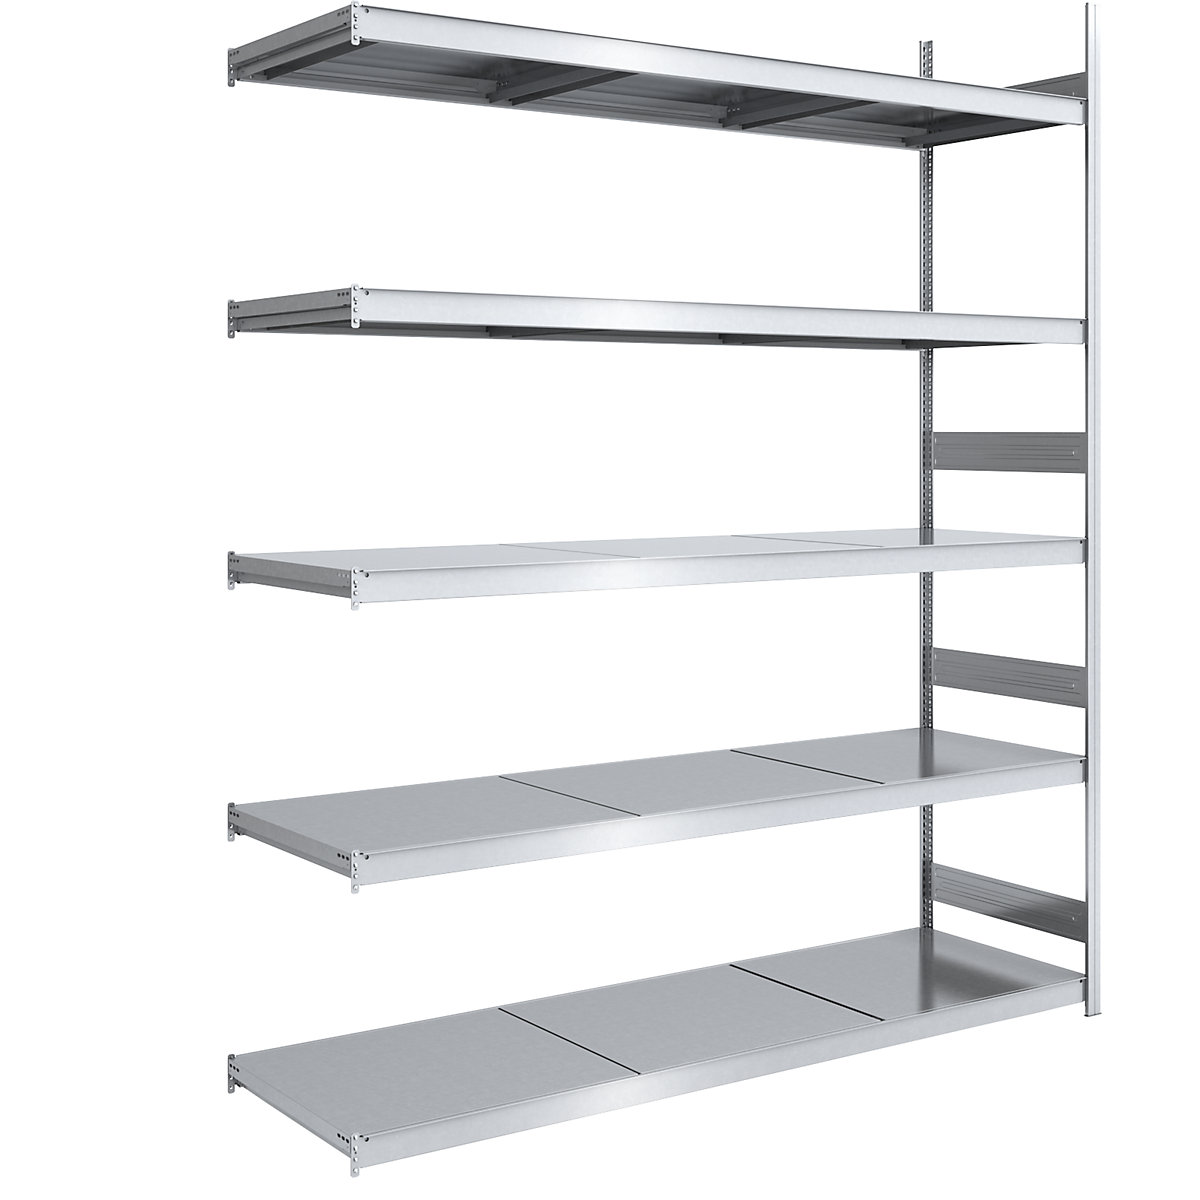 Wide span boltless shelving unit, zinc plated – hofe, shelf WxD 2250 x 800 mm, extension shelf unit, 5 steel shelves, height 3000 mm